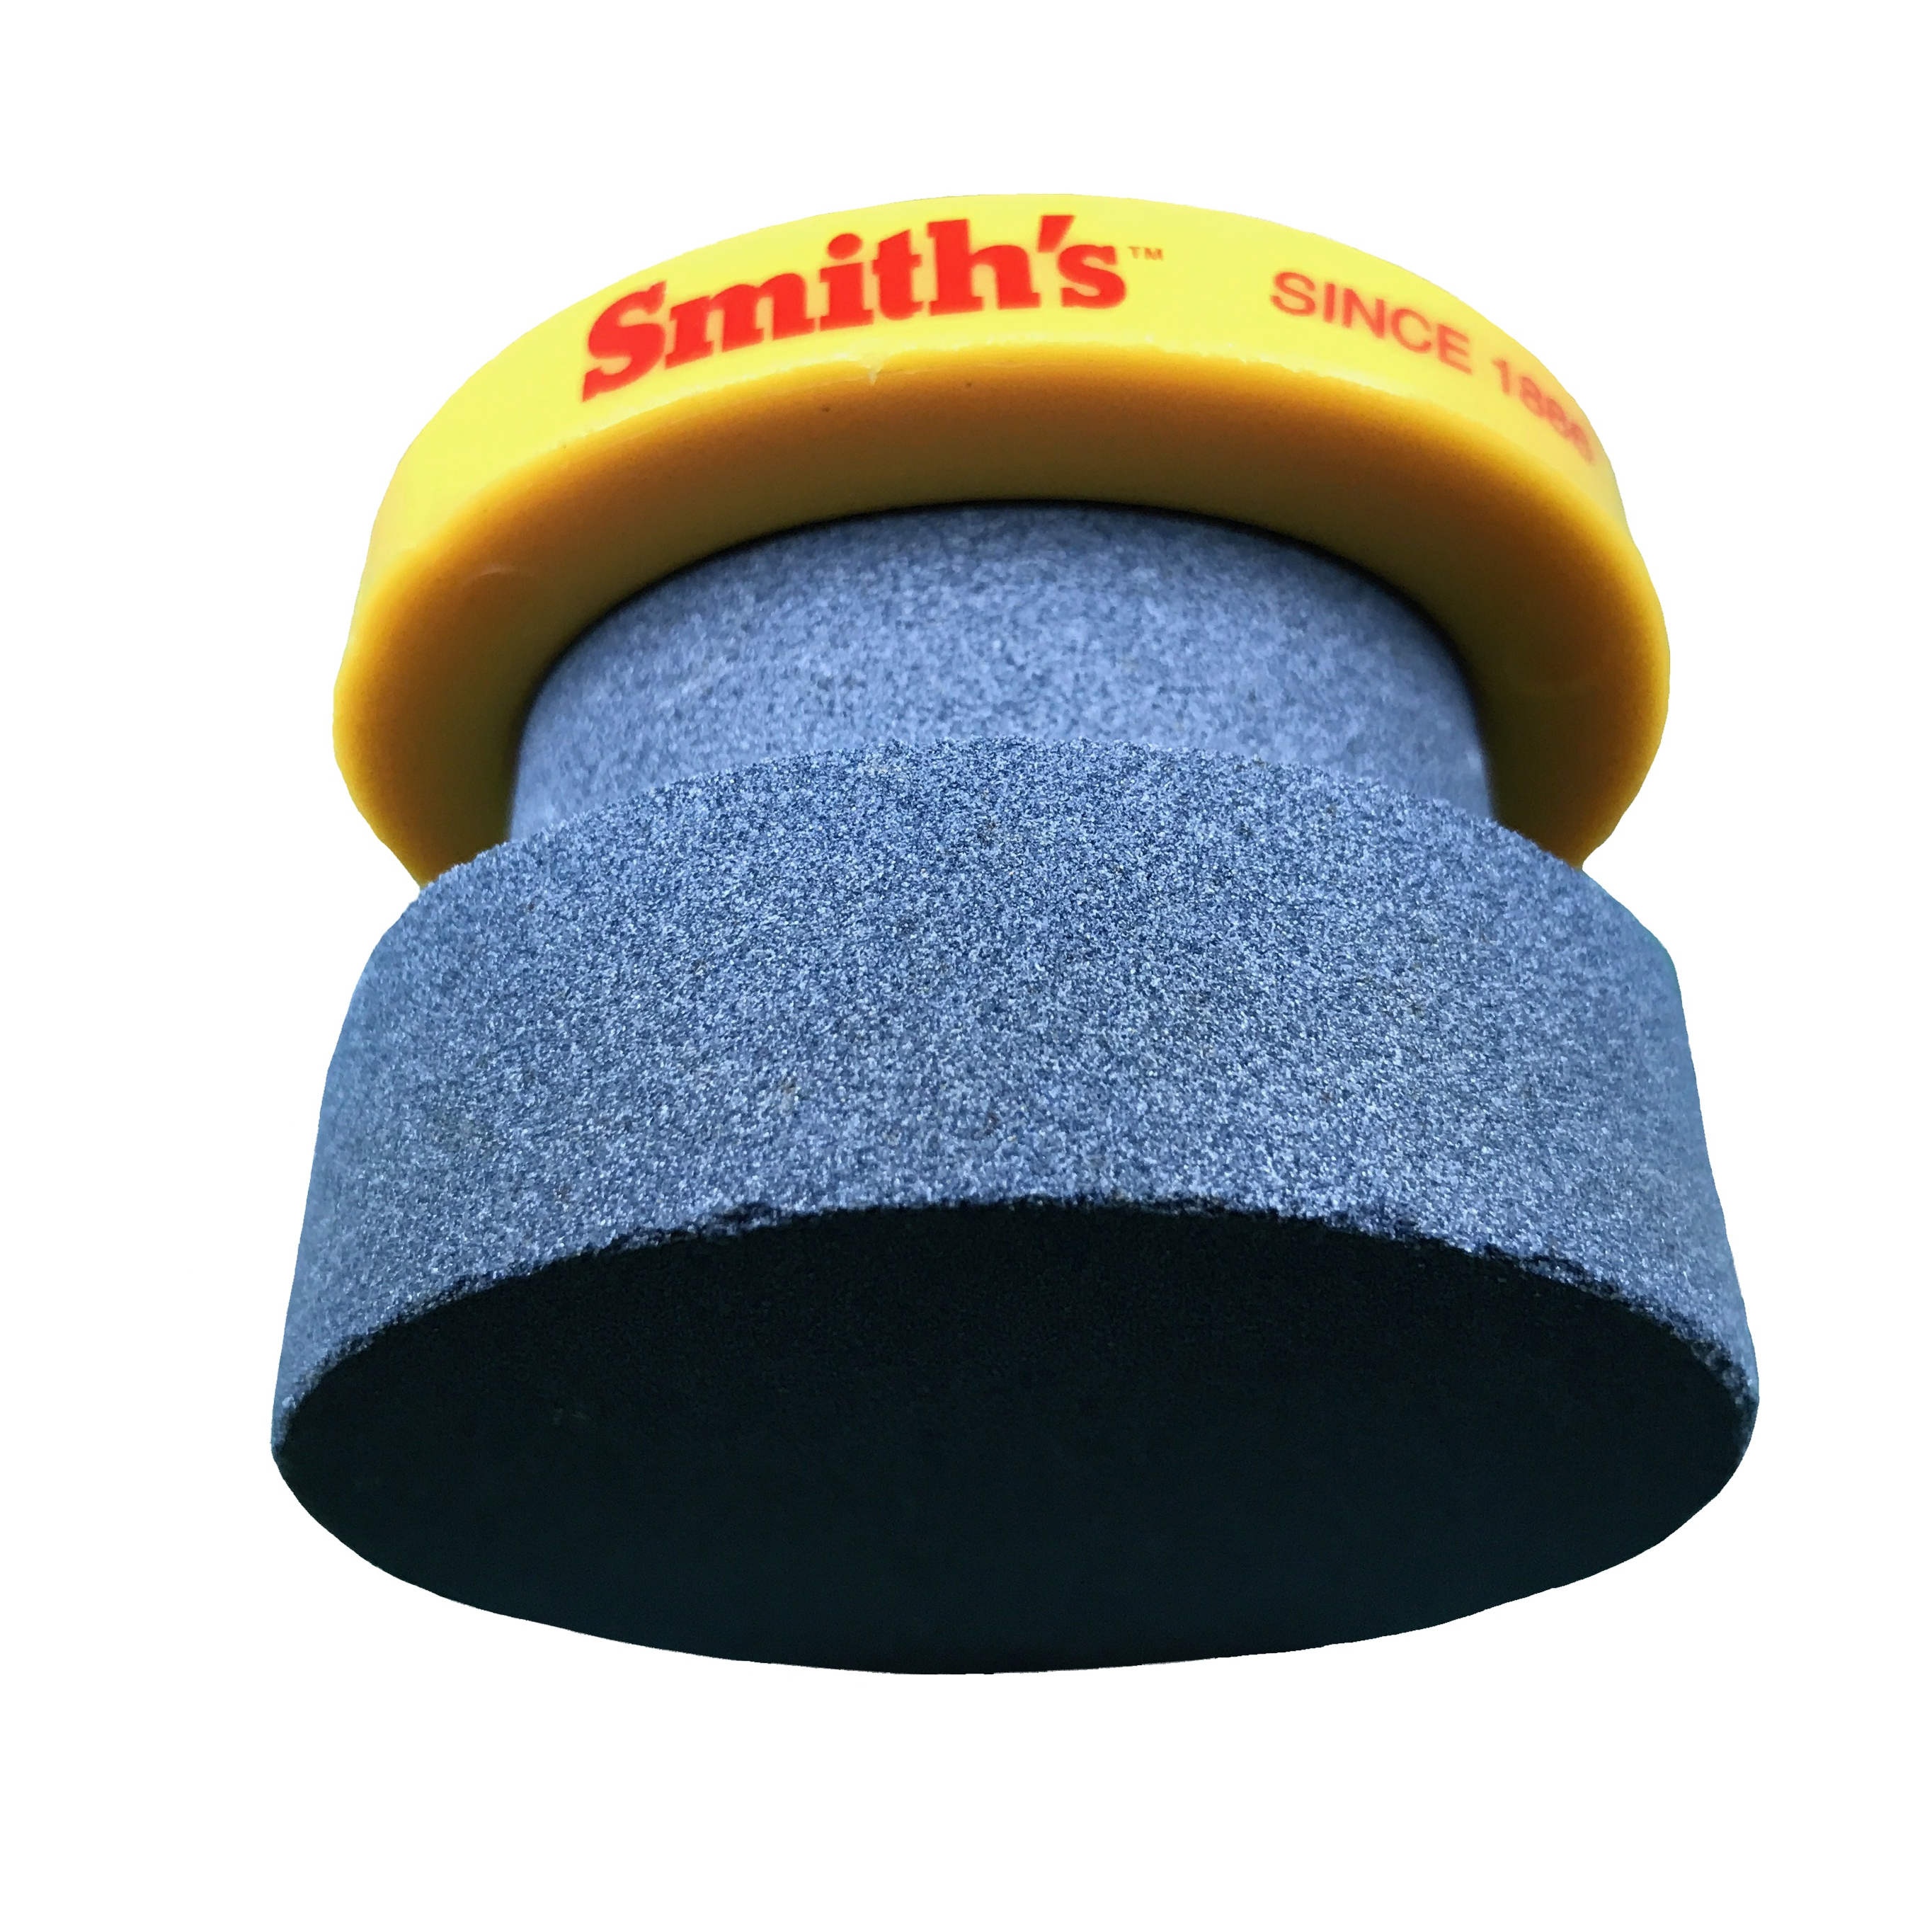 Smiths Products 50090 Edge Pro Pull-Thru Sharpener Ceramic Stone Coarse,  Extra Fine 